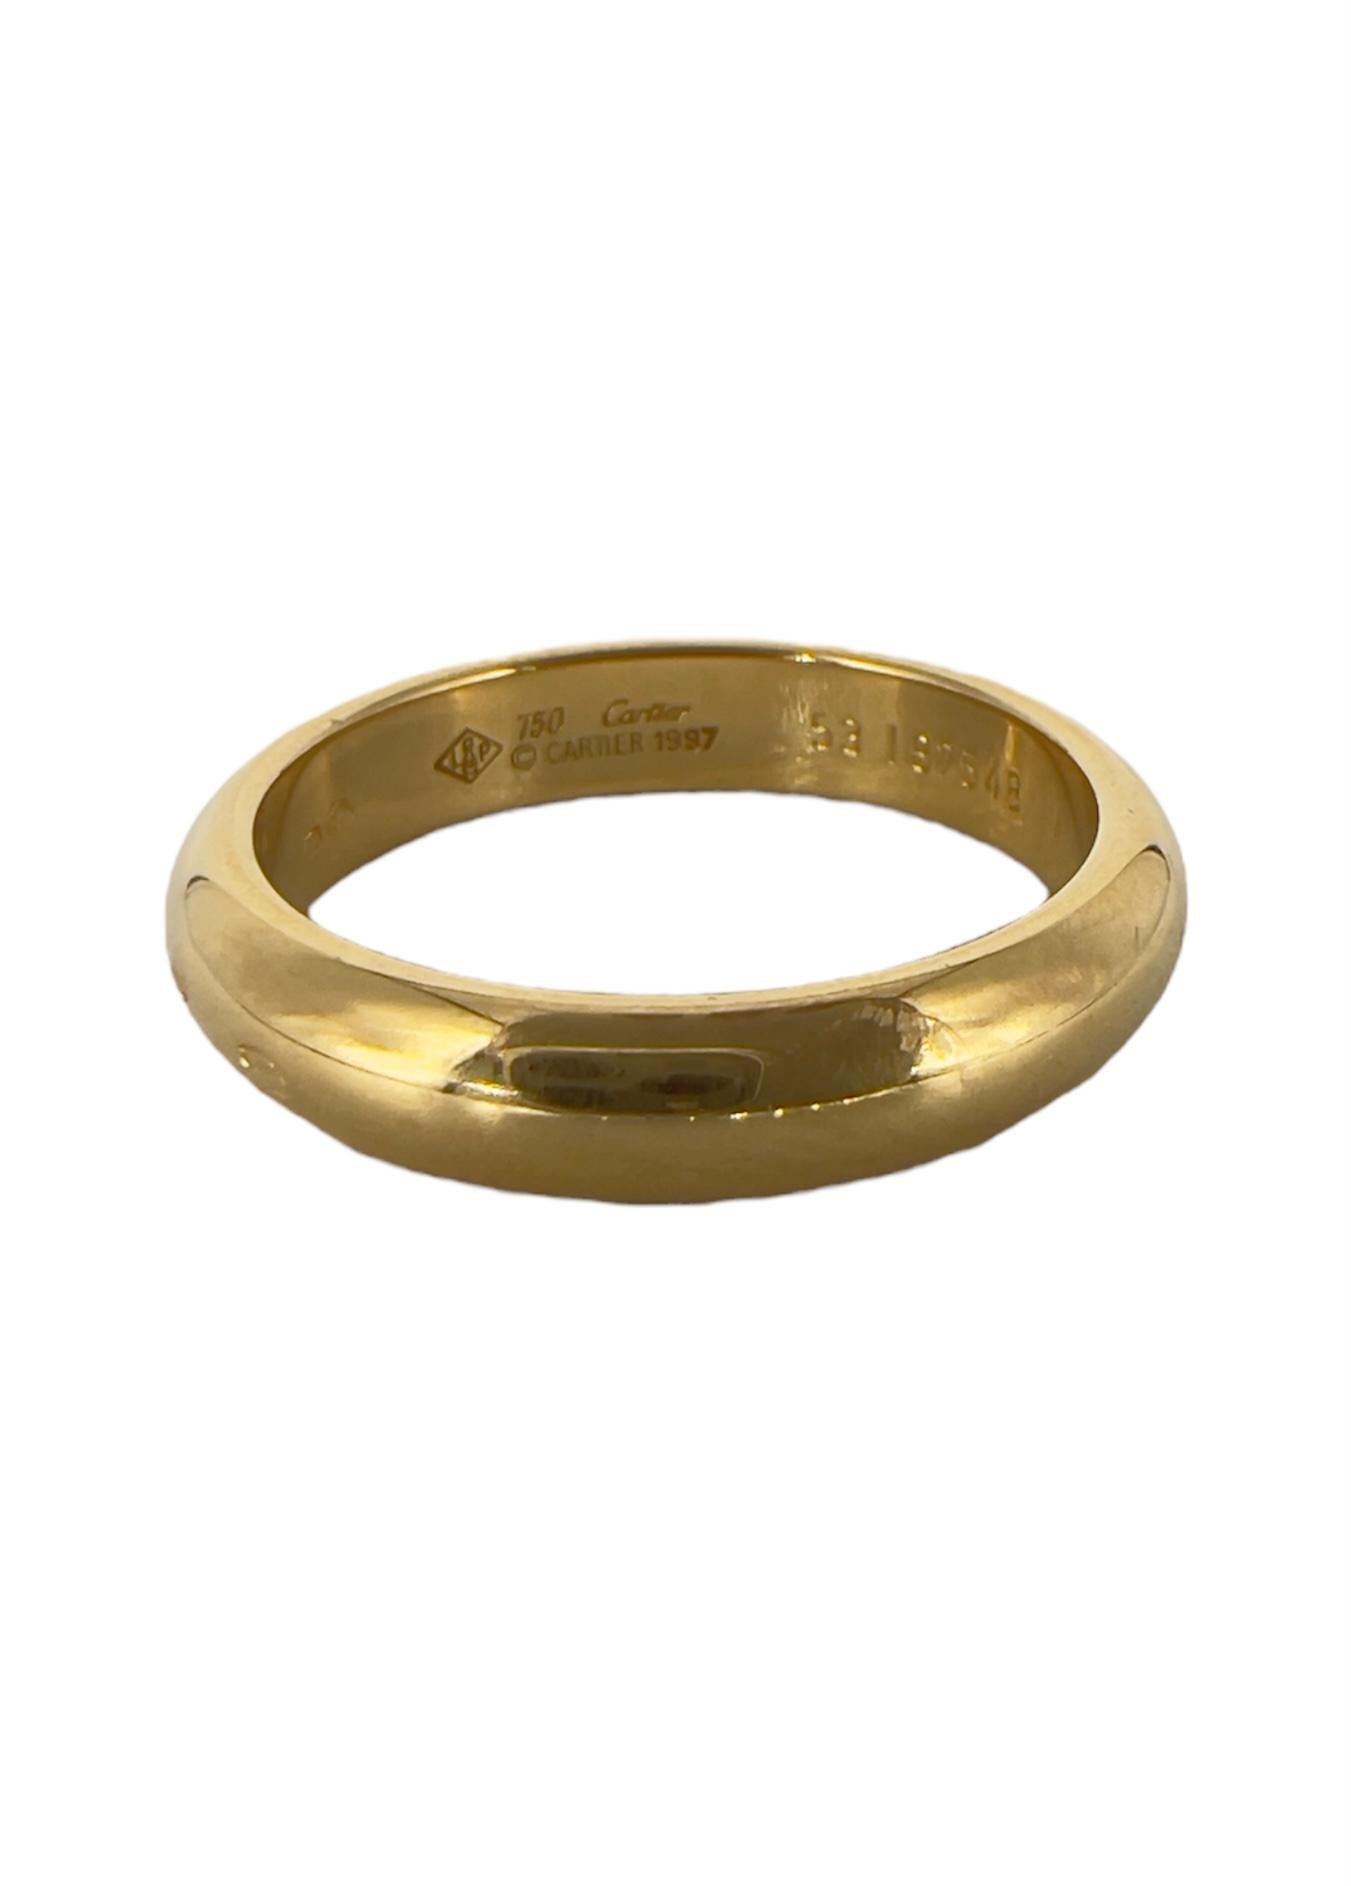 Contemporary Cartier love ring 